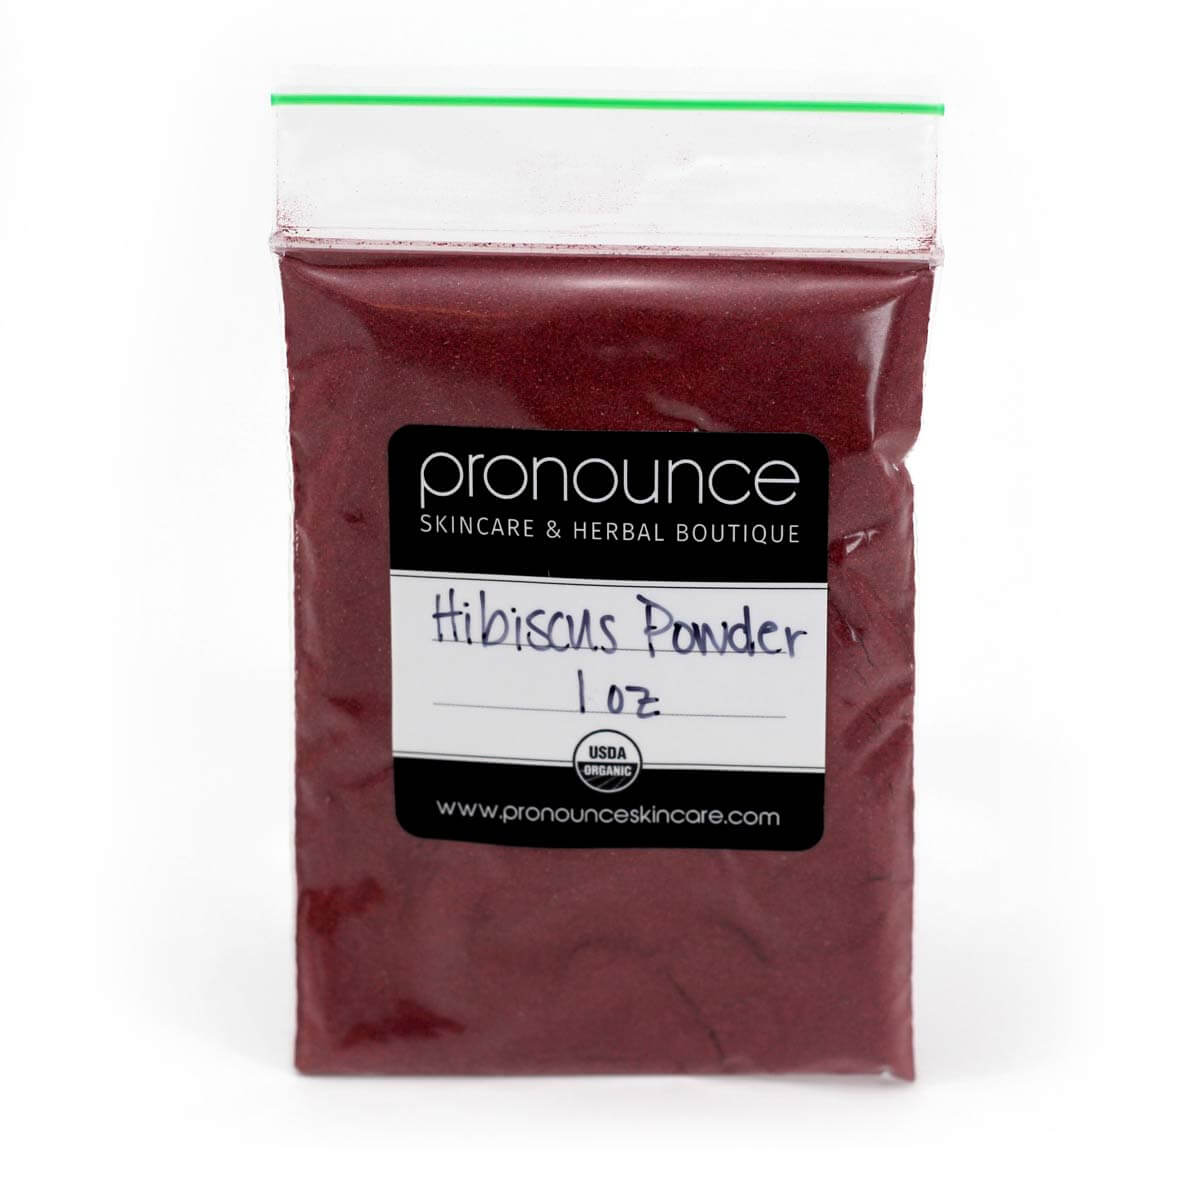 Bag of Hibiscus Powder 1oz Pronounce Skincare Herbal Boutique